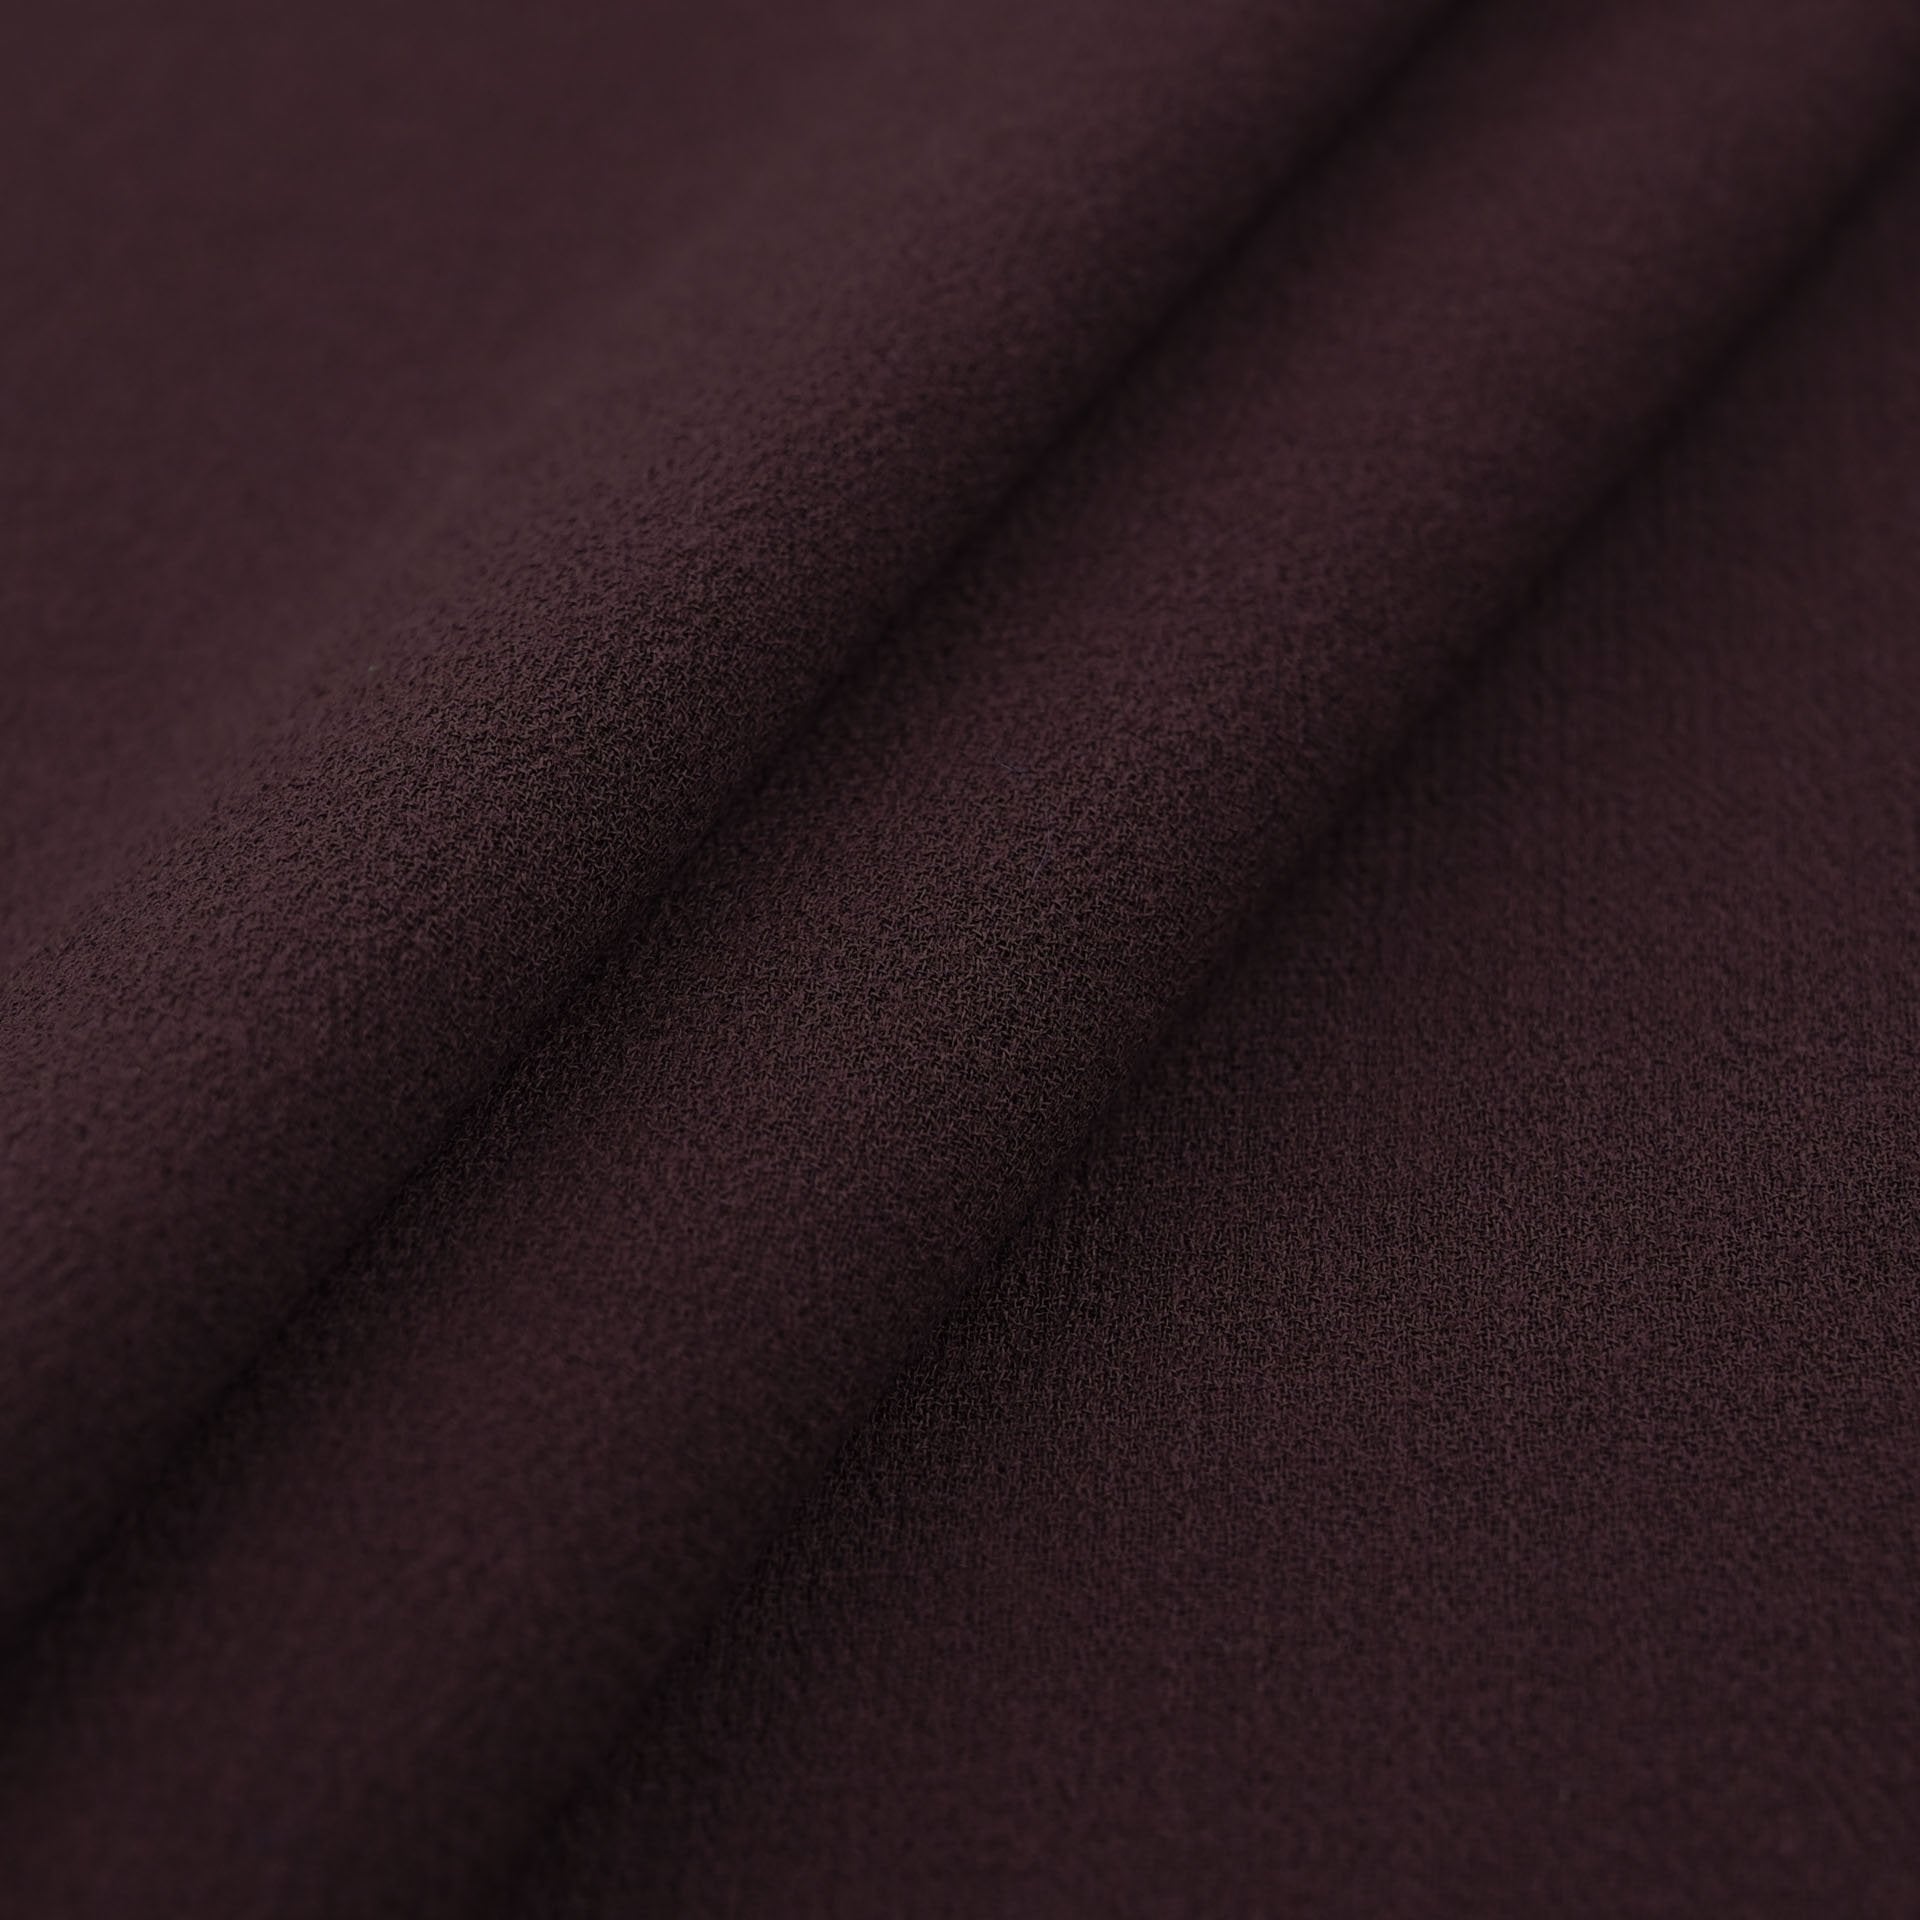 Burgundy Double Weave Crepe Fabric 96863